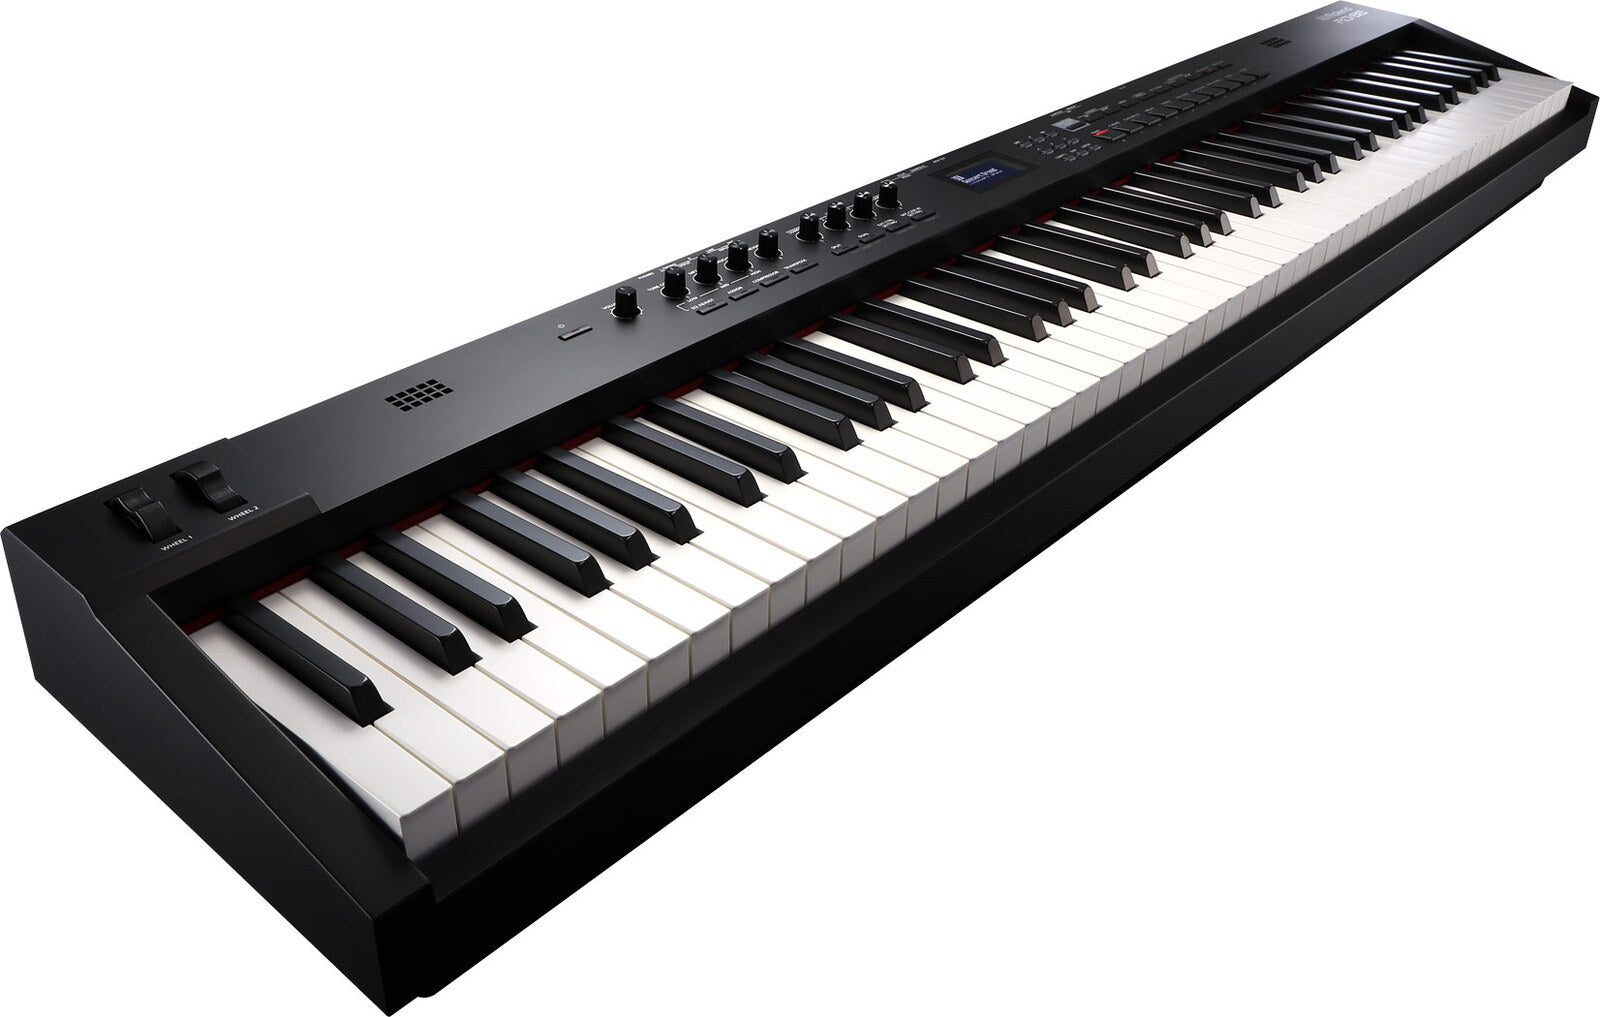 Roland RD-08 88-key Digital Stage Piano